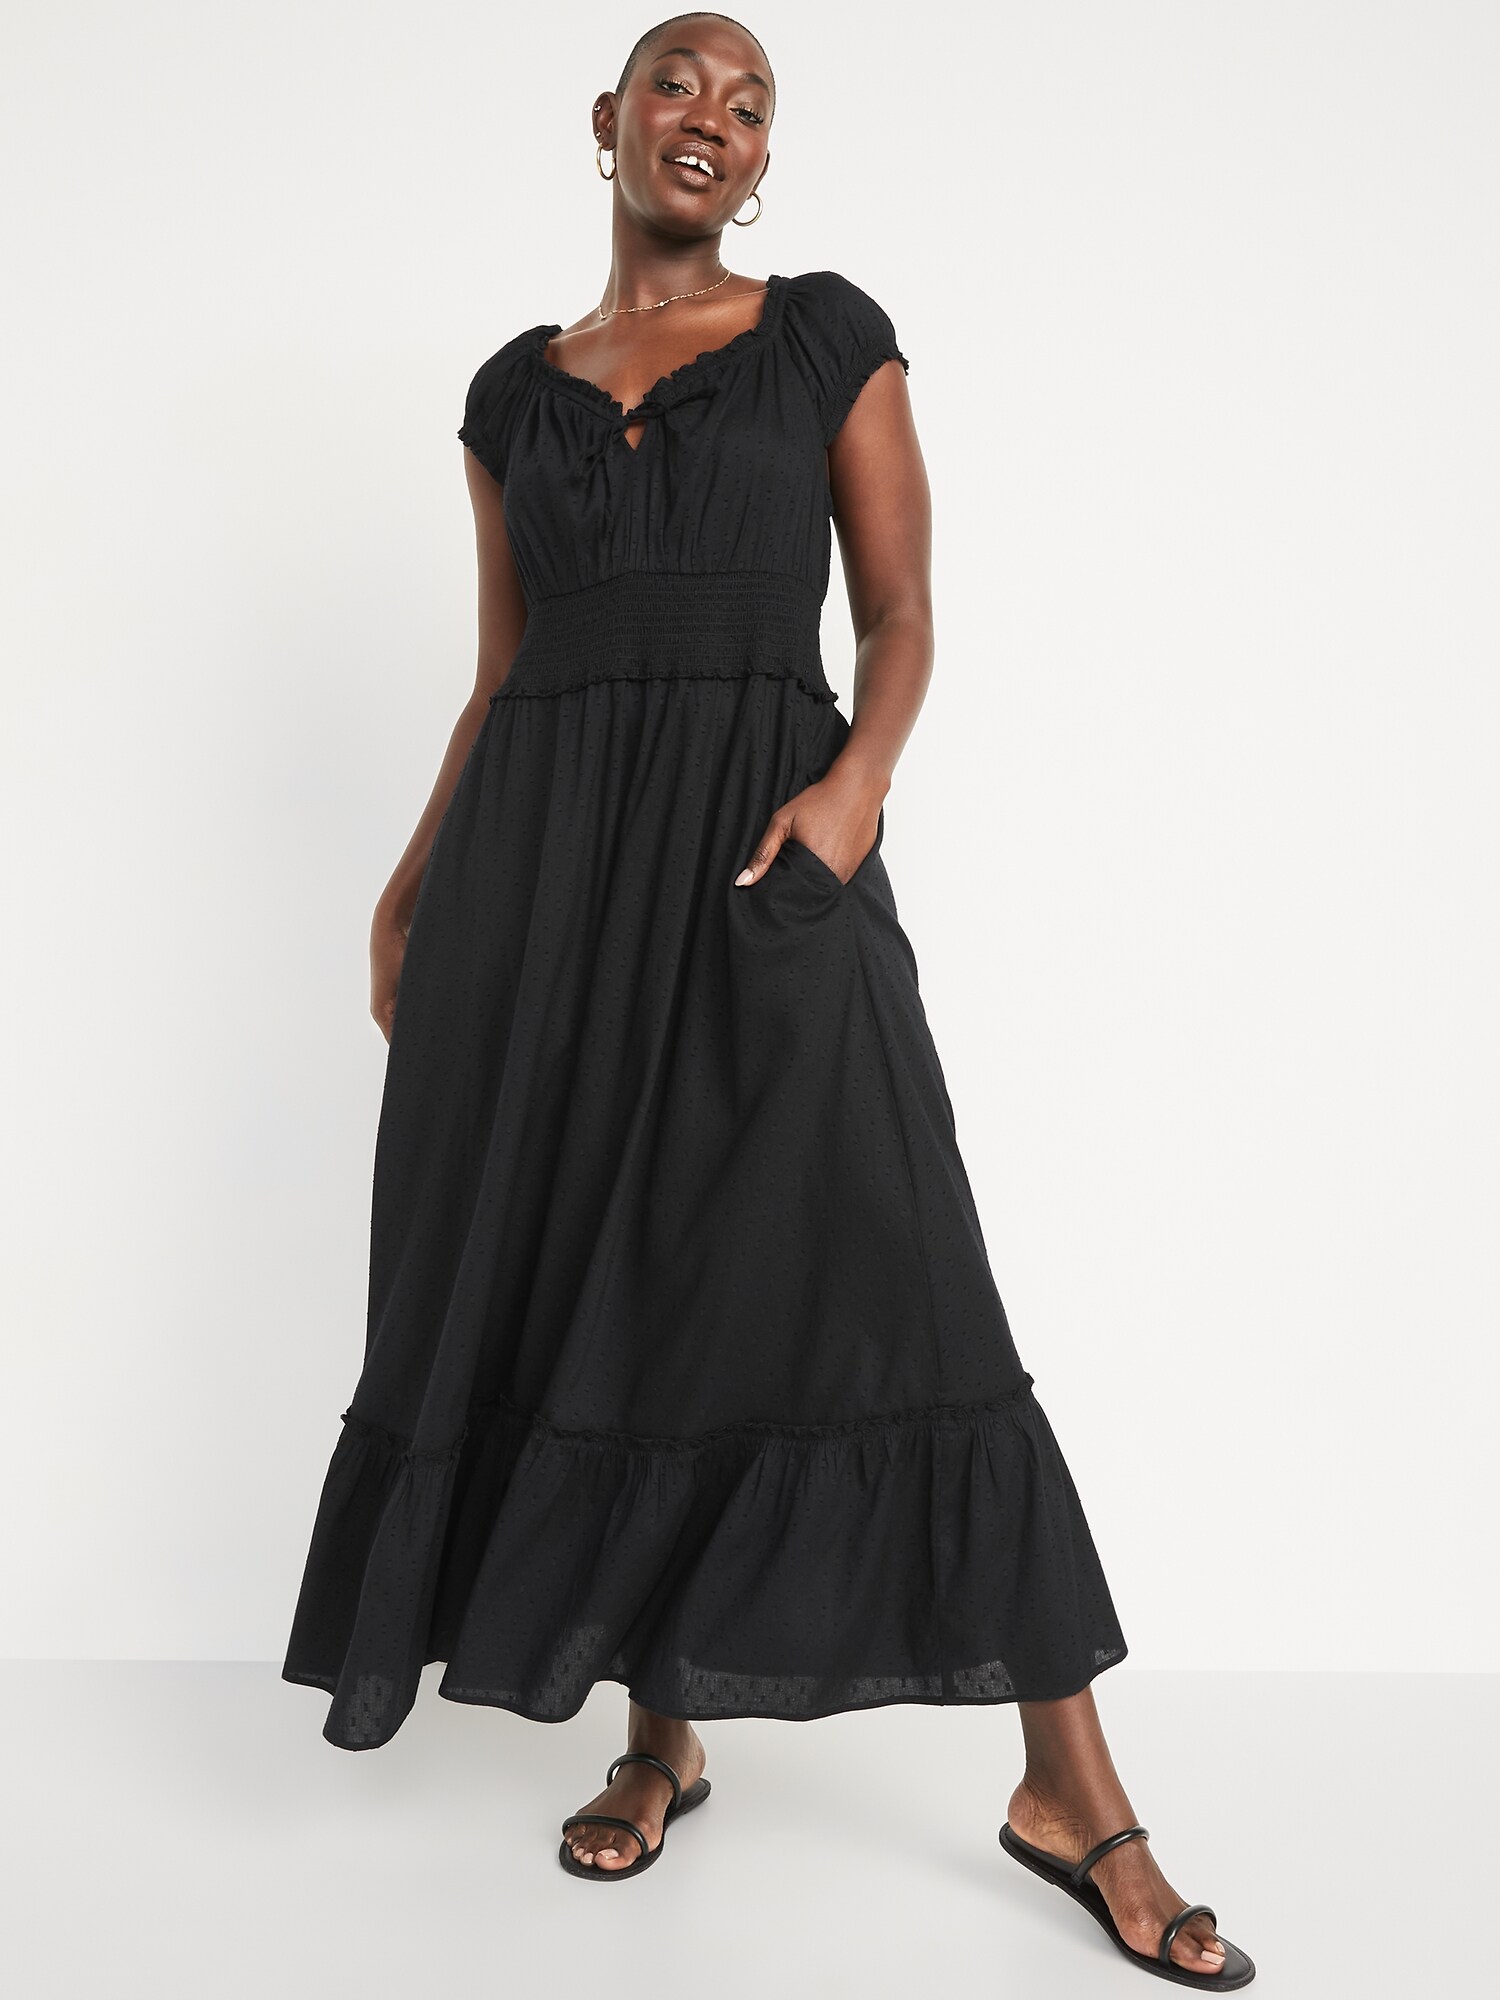 Waist-Defined Puff-Sleeve Clip-Dot Midi Dress for Women